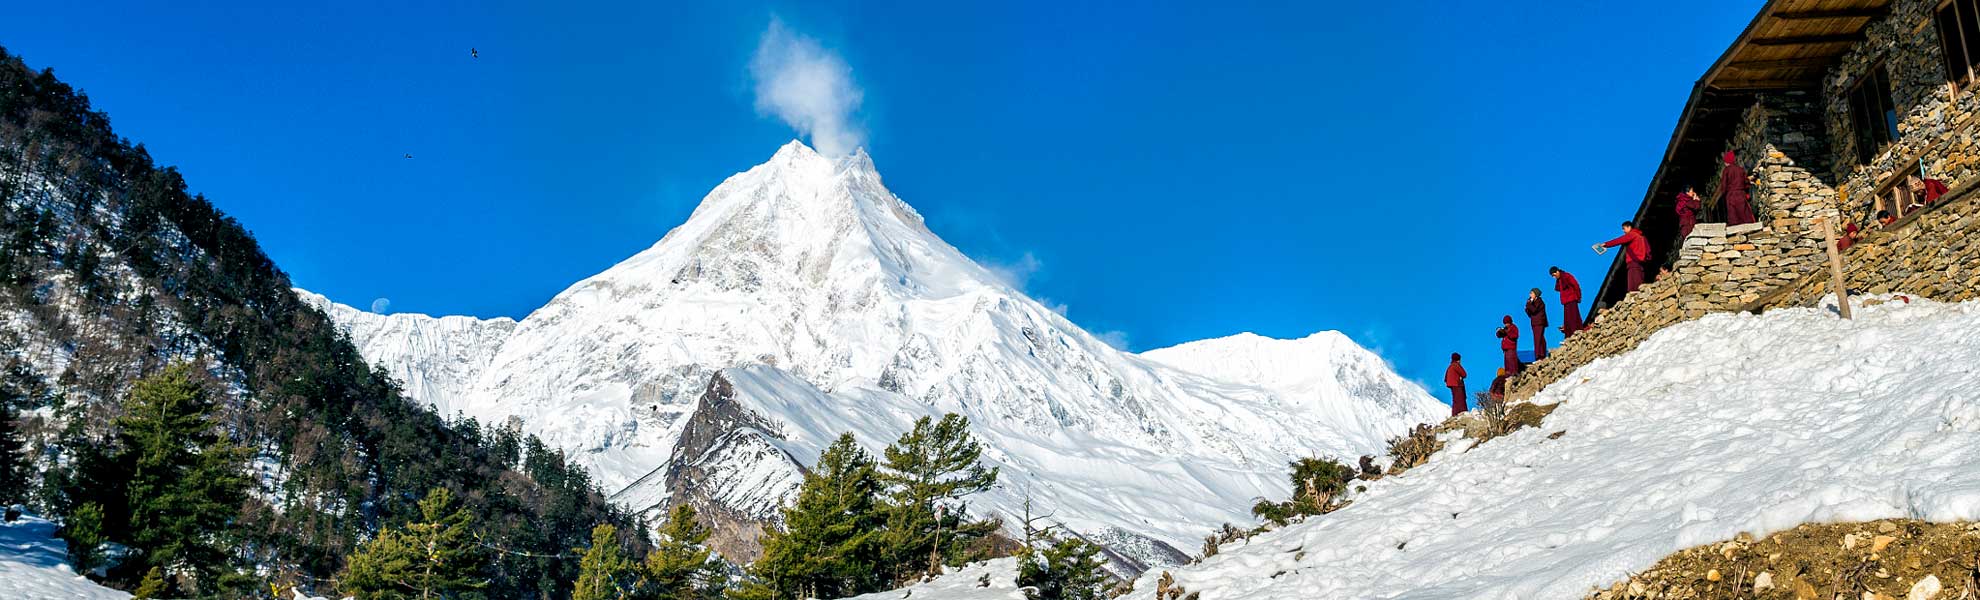 Nepal Travel Guide Part Two : Manaslu Trekking